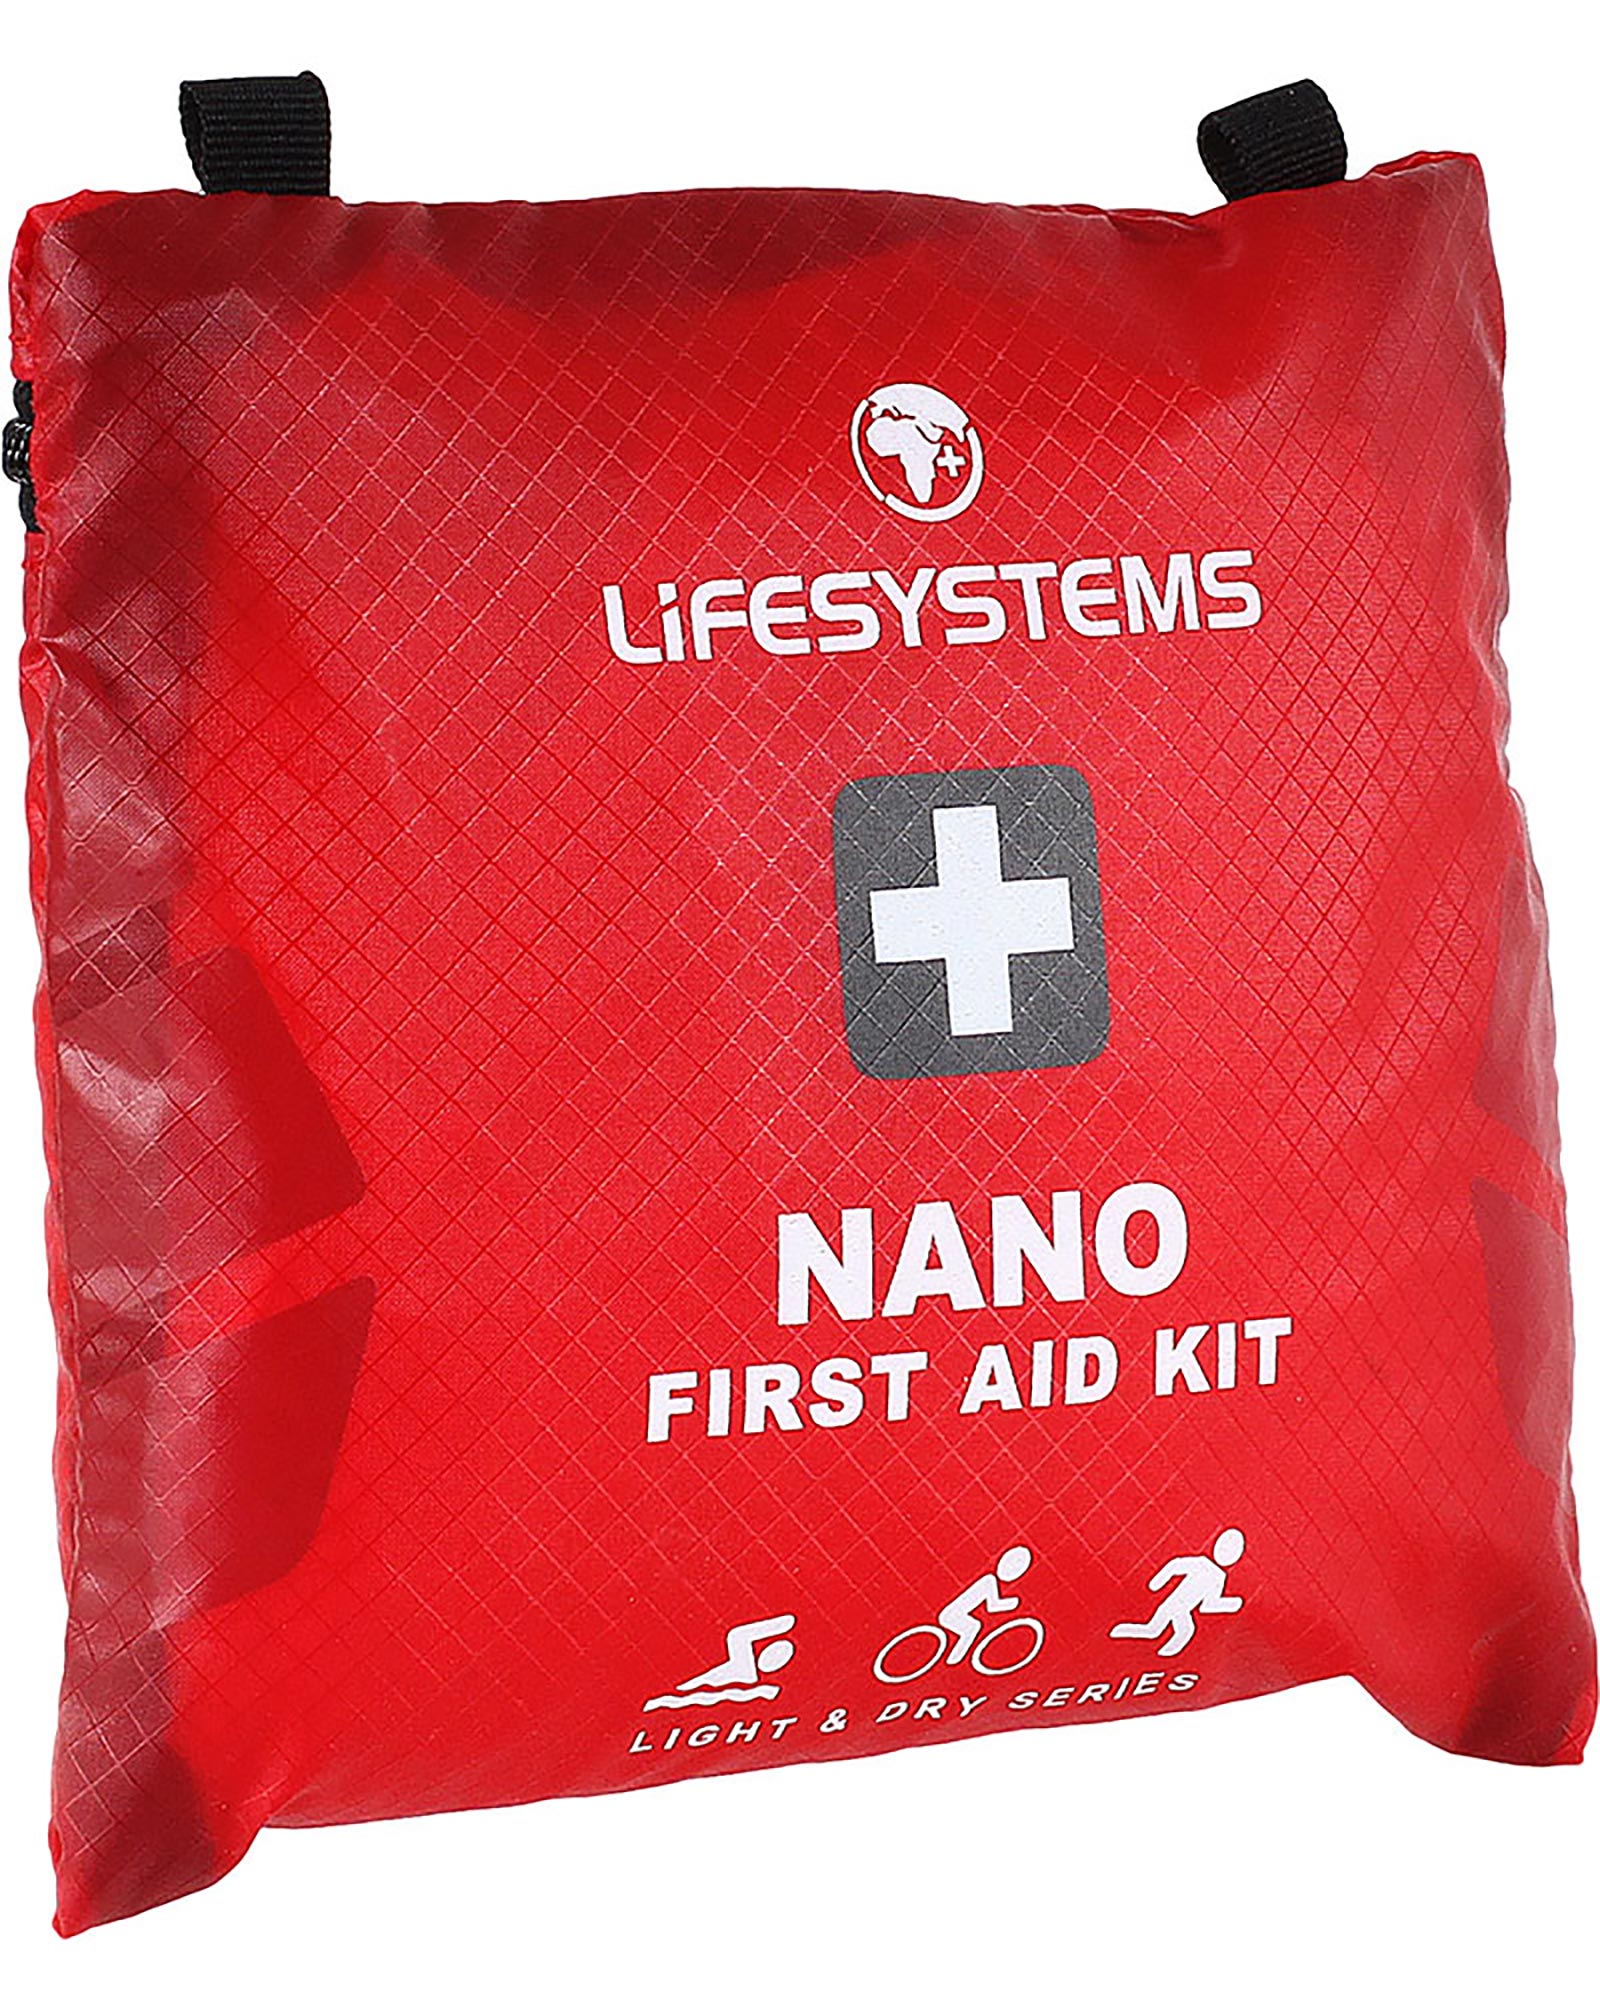 Lifesystems LightandDry Nano First Aid Kit